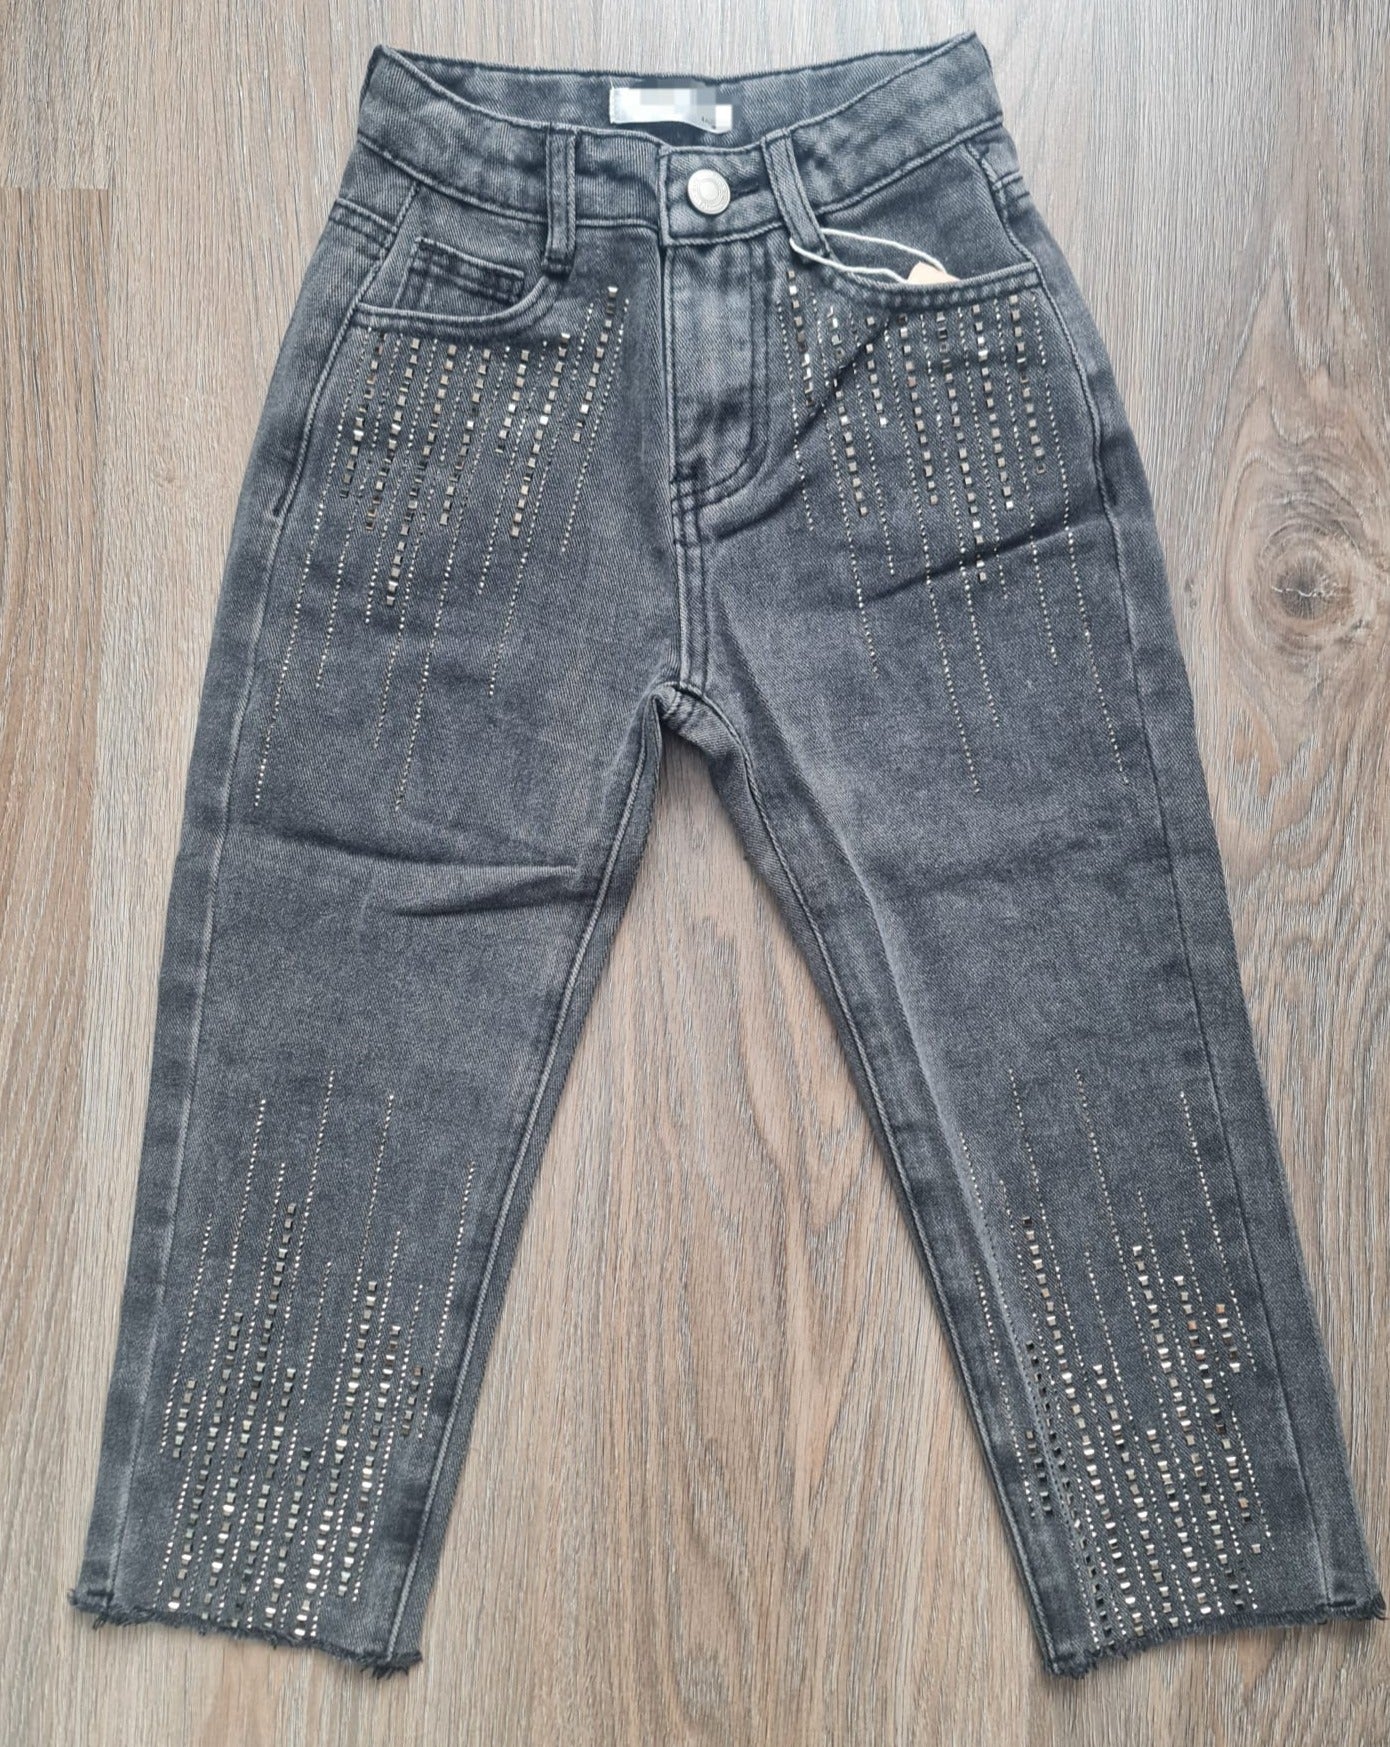 Blinged Jeans II